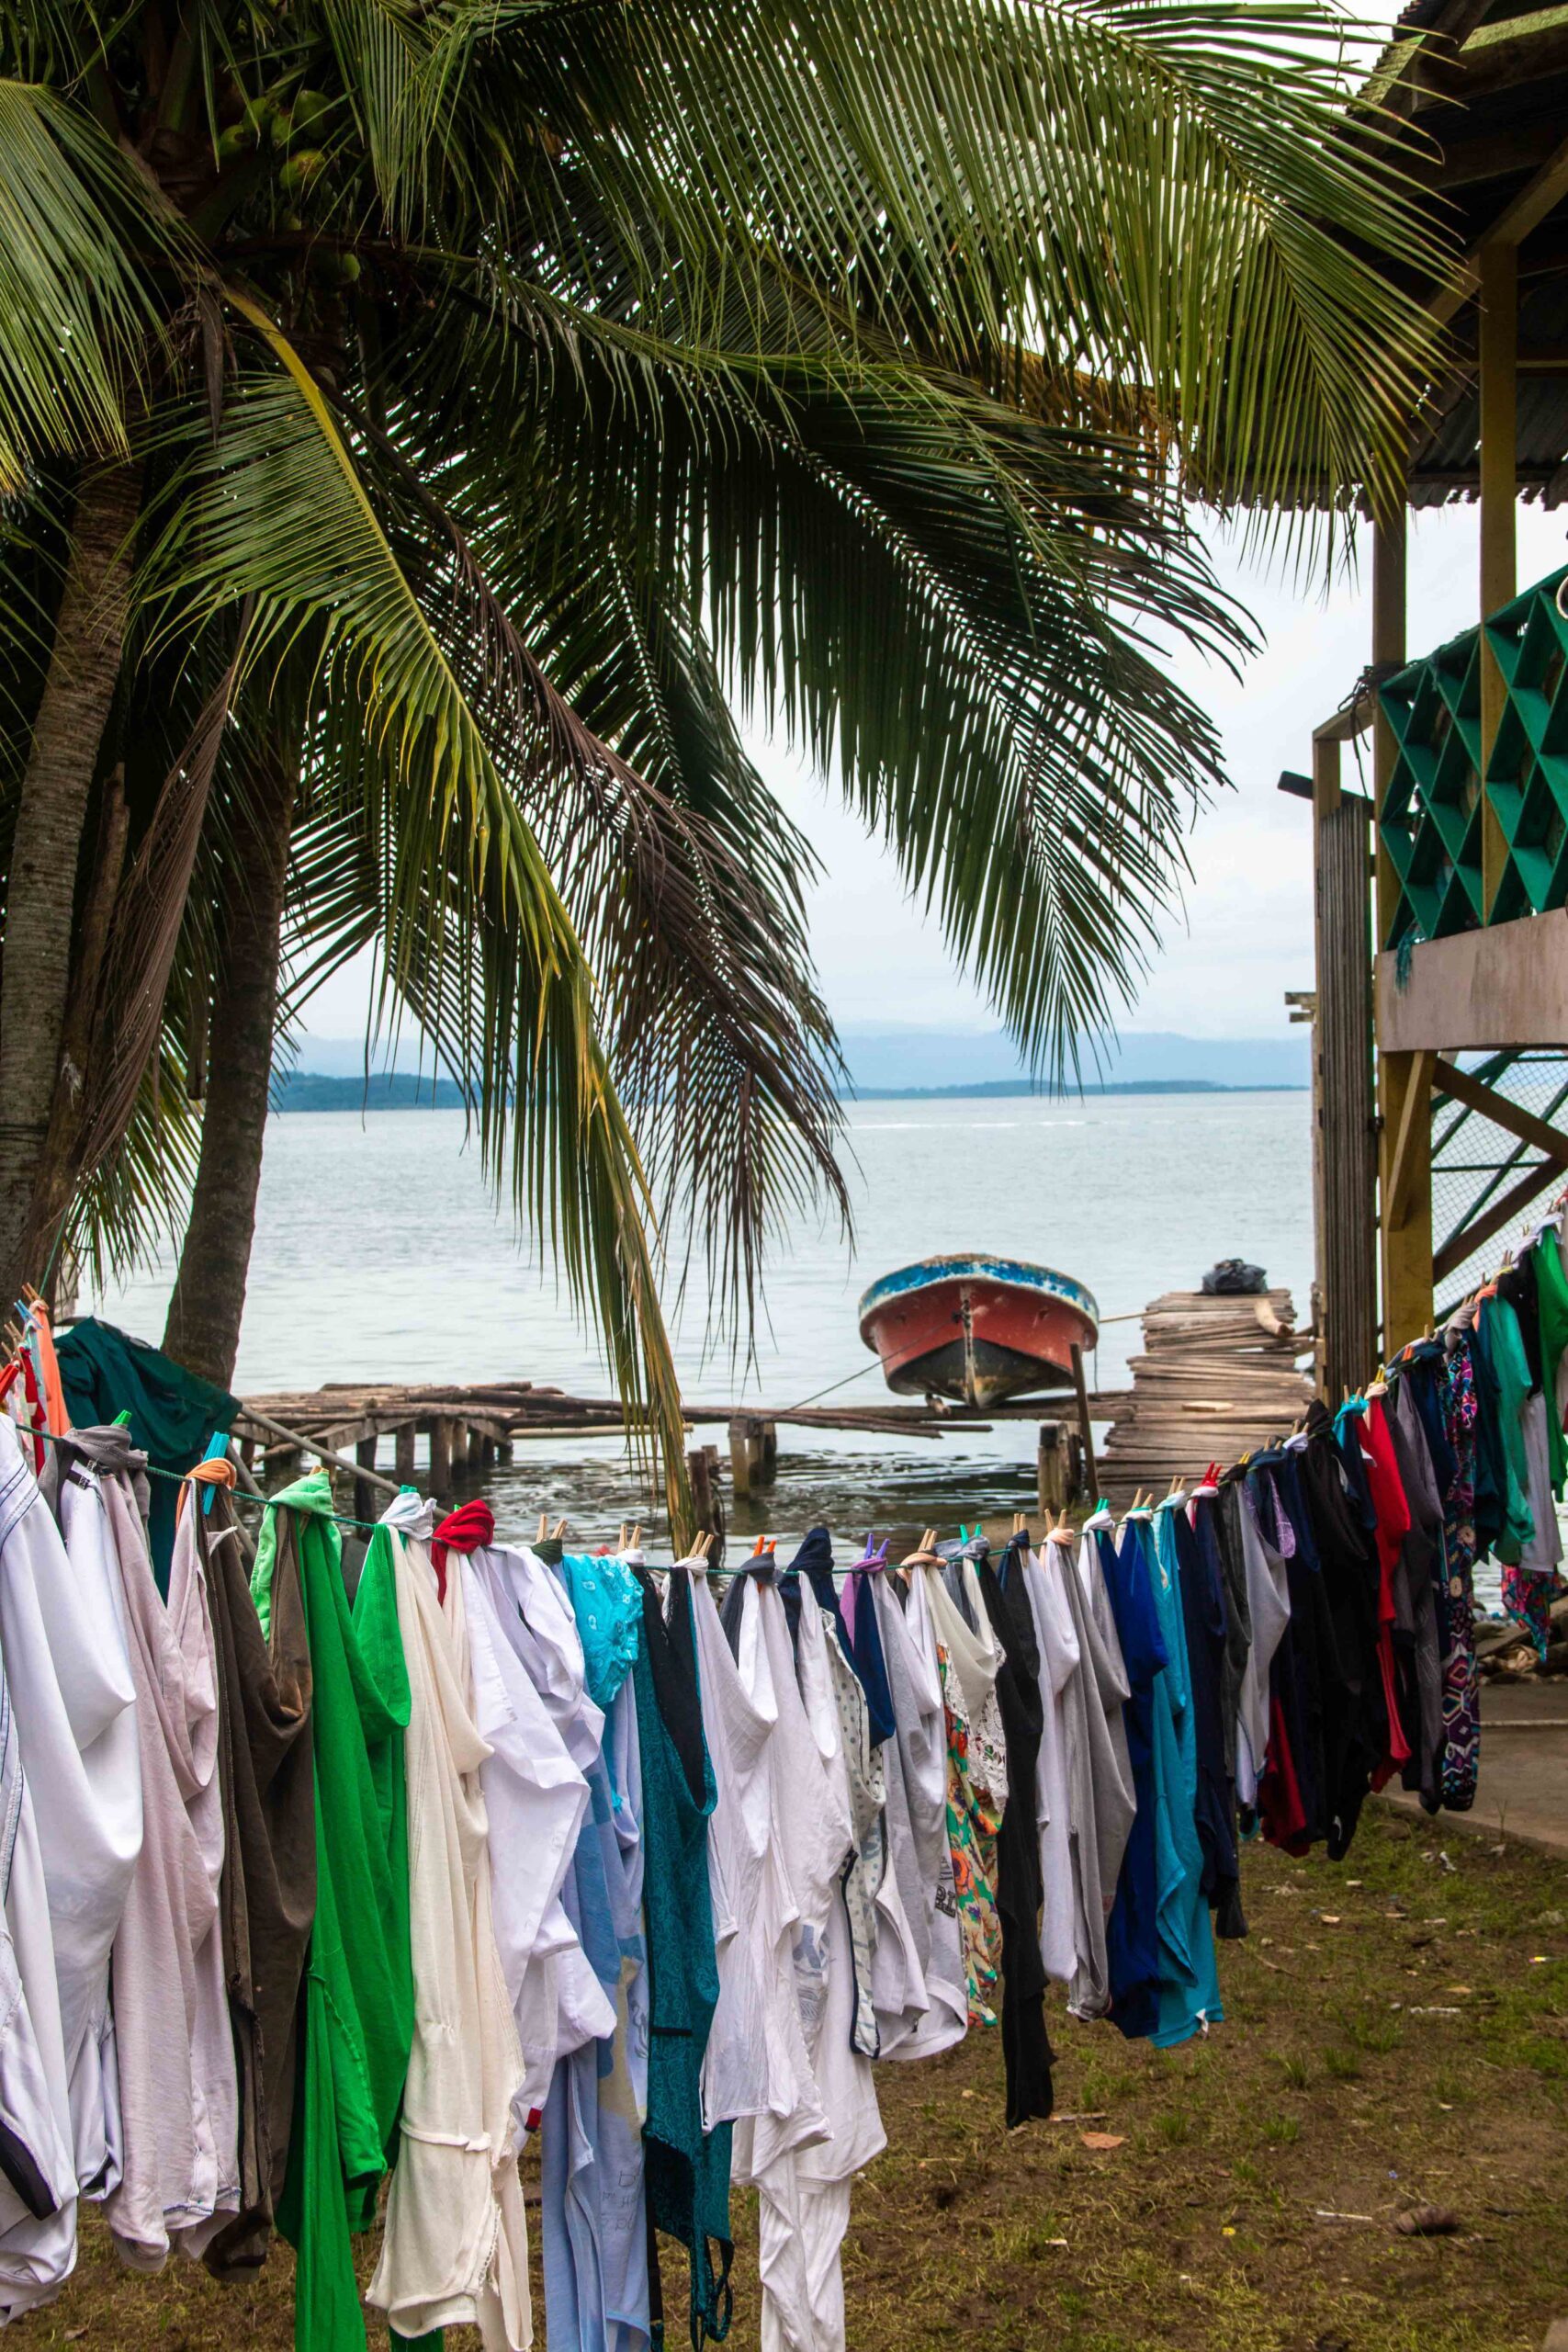 Laundry day at Isla Bastimentos Bocas del Toro